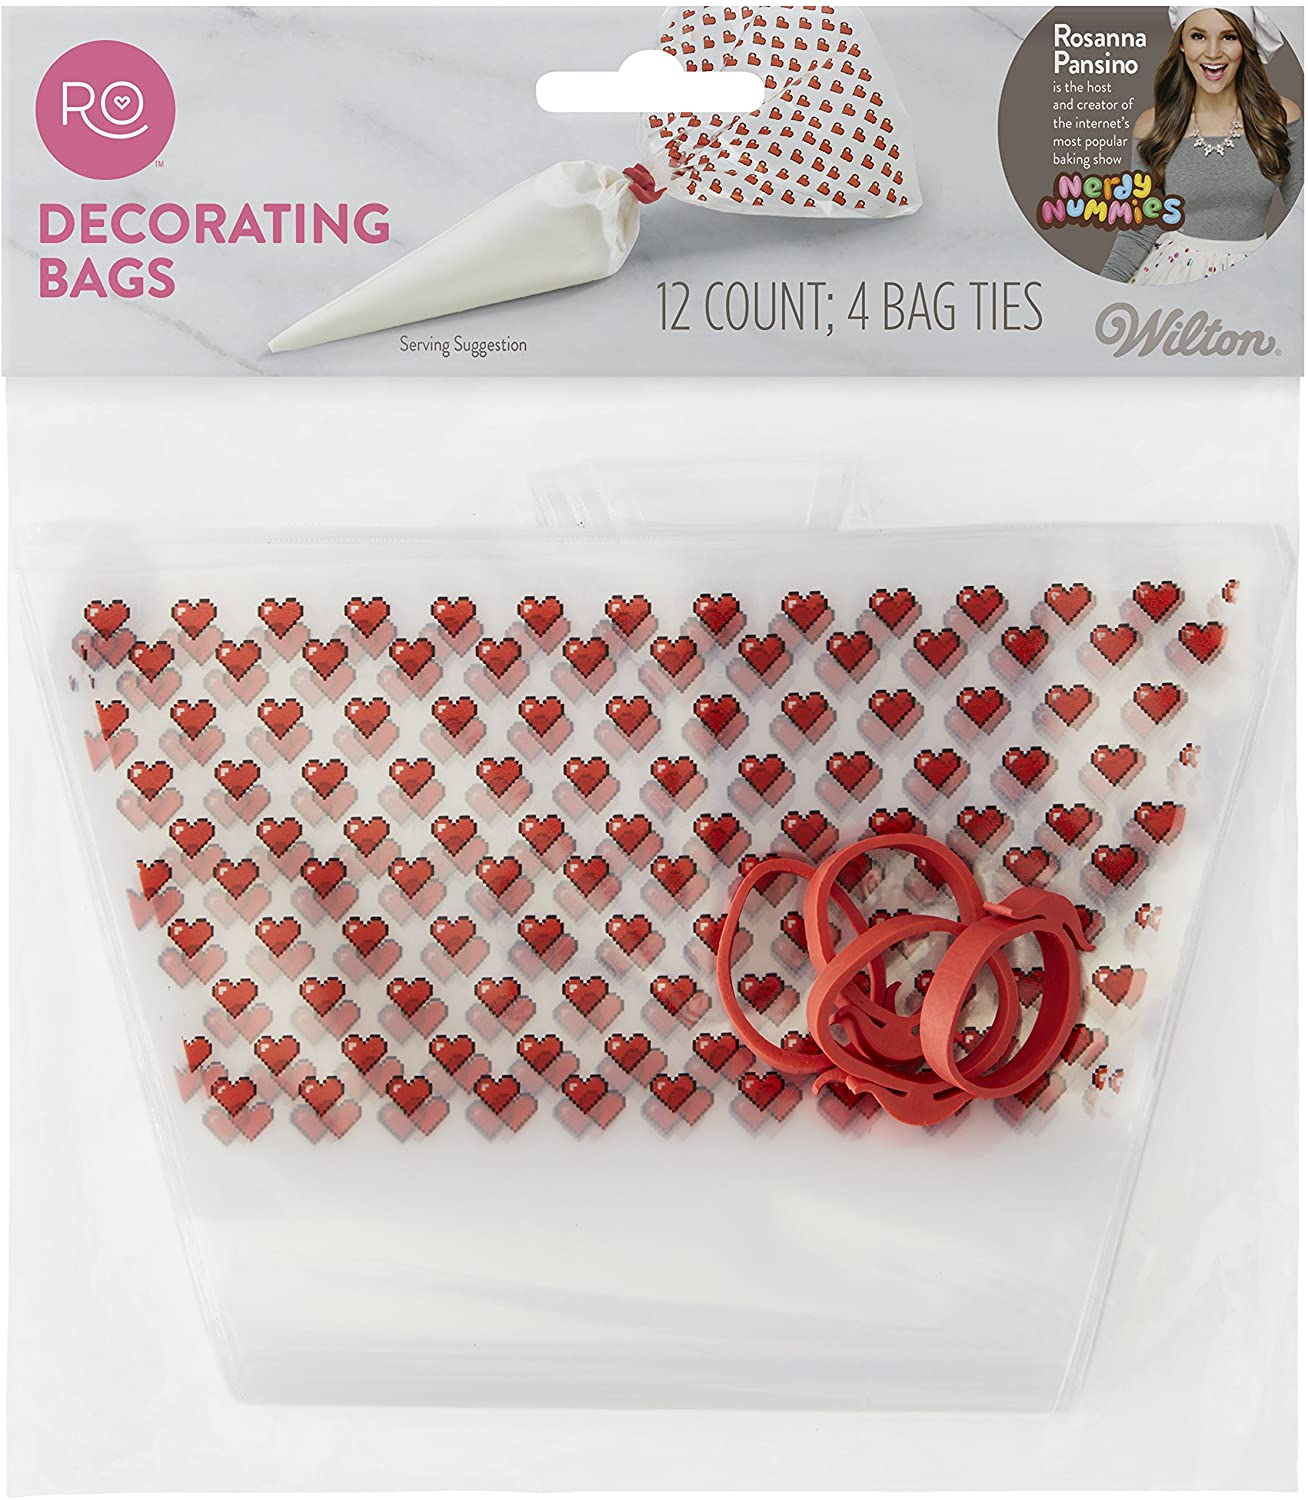 Wilton Rosanna Pansino Disposable Decorating Bags (Pack of 12)